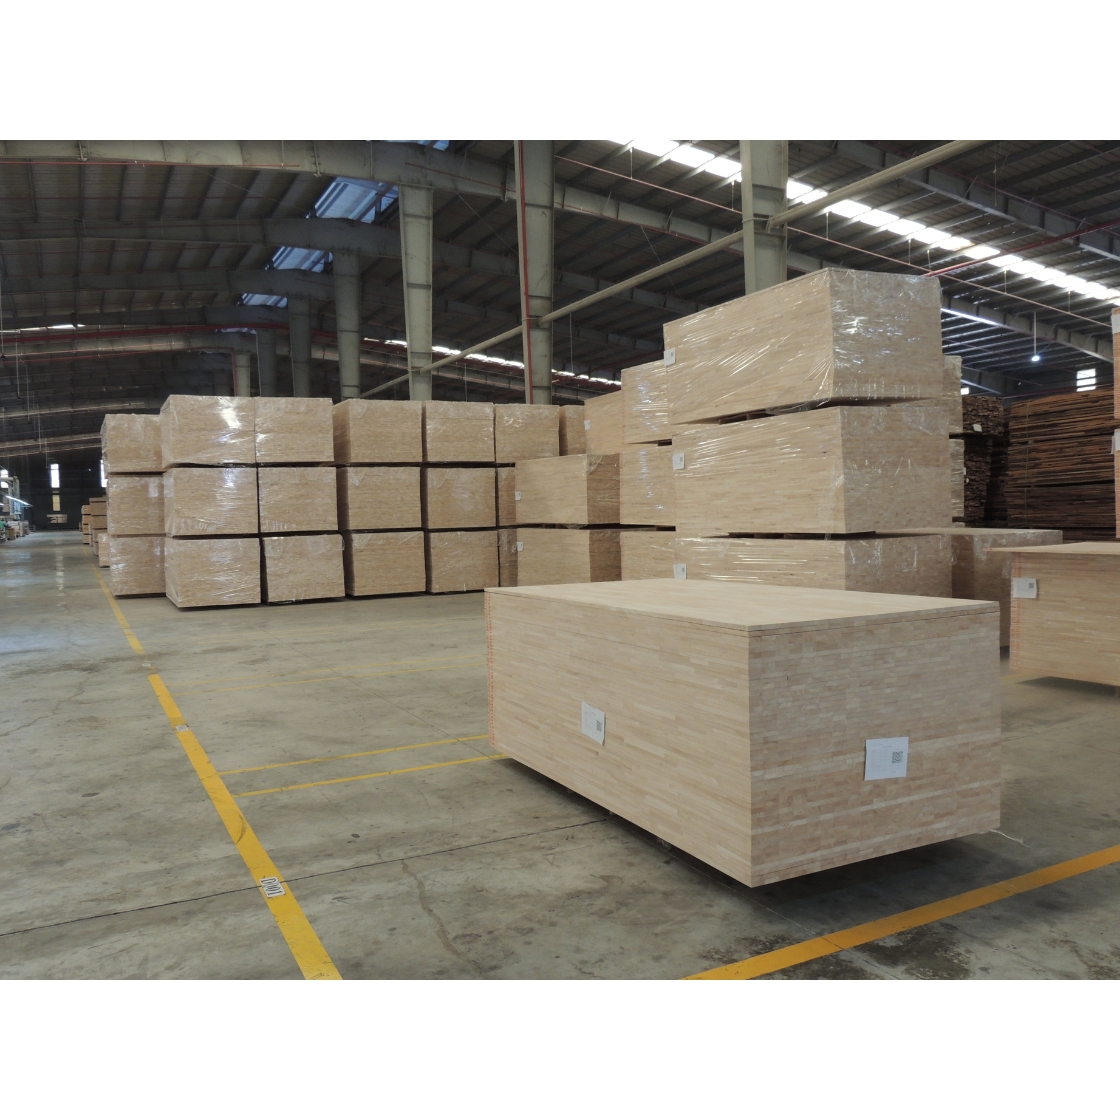 Warranty 1 Year Professional Team Export Cabinet Doors Frame And Components Fsc-Coc Plastic Bag Vietnam Manufacturer 4